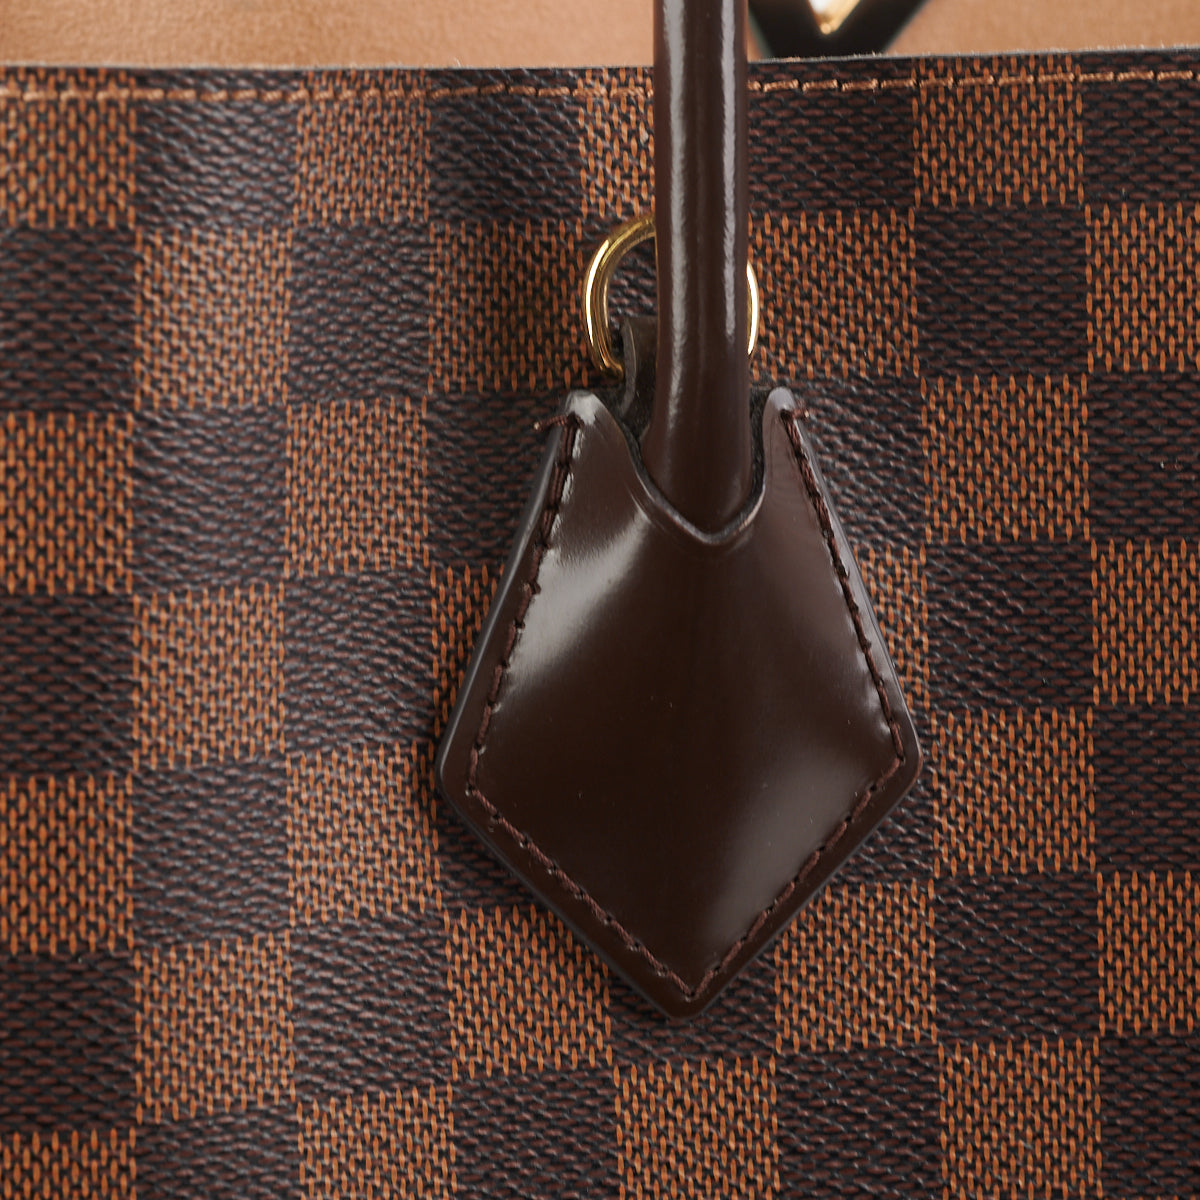 Louis Vuitton Kensington Damier Ebene Bag - THE PURSE AFFAIR